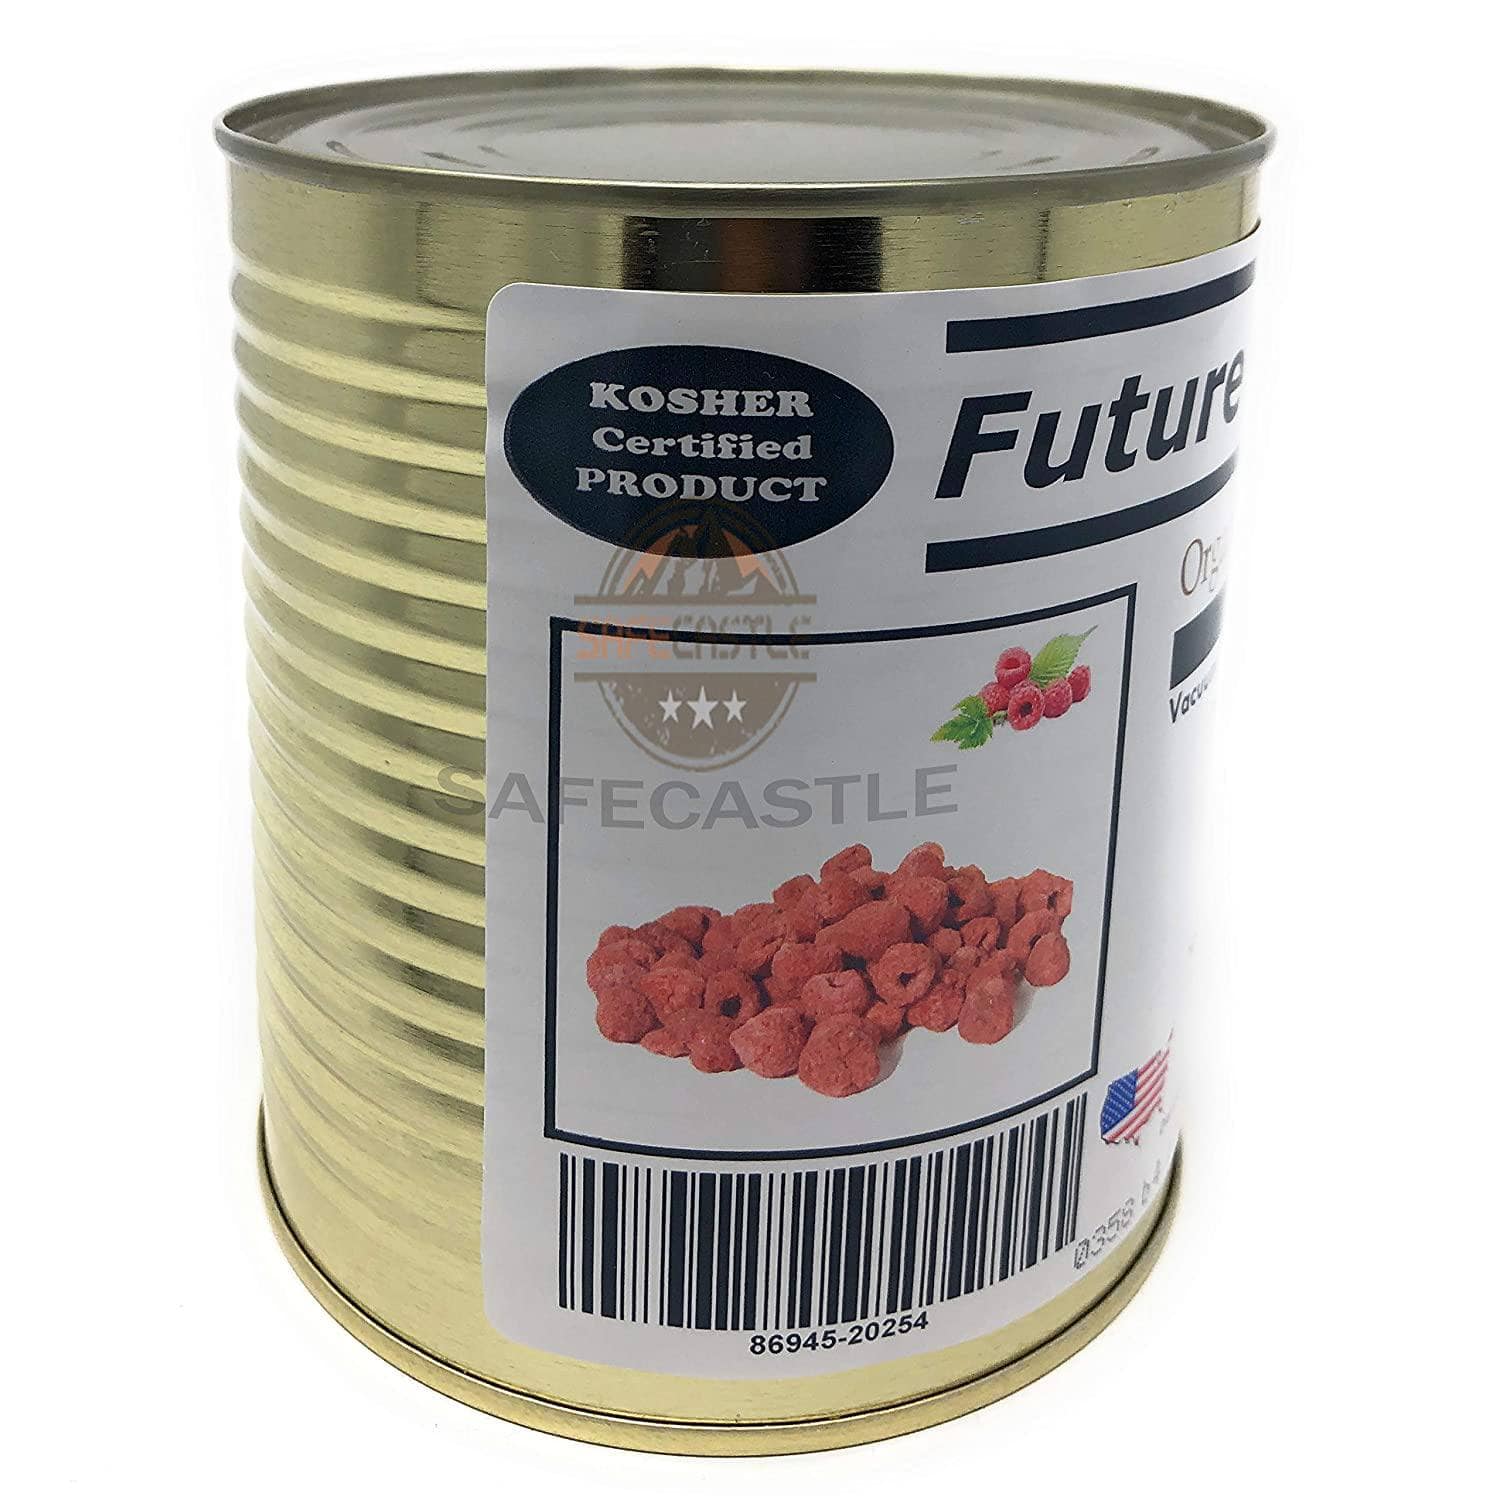 Future Essentials Freeze Dried Whole Raspberries case